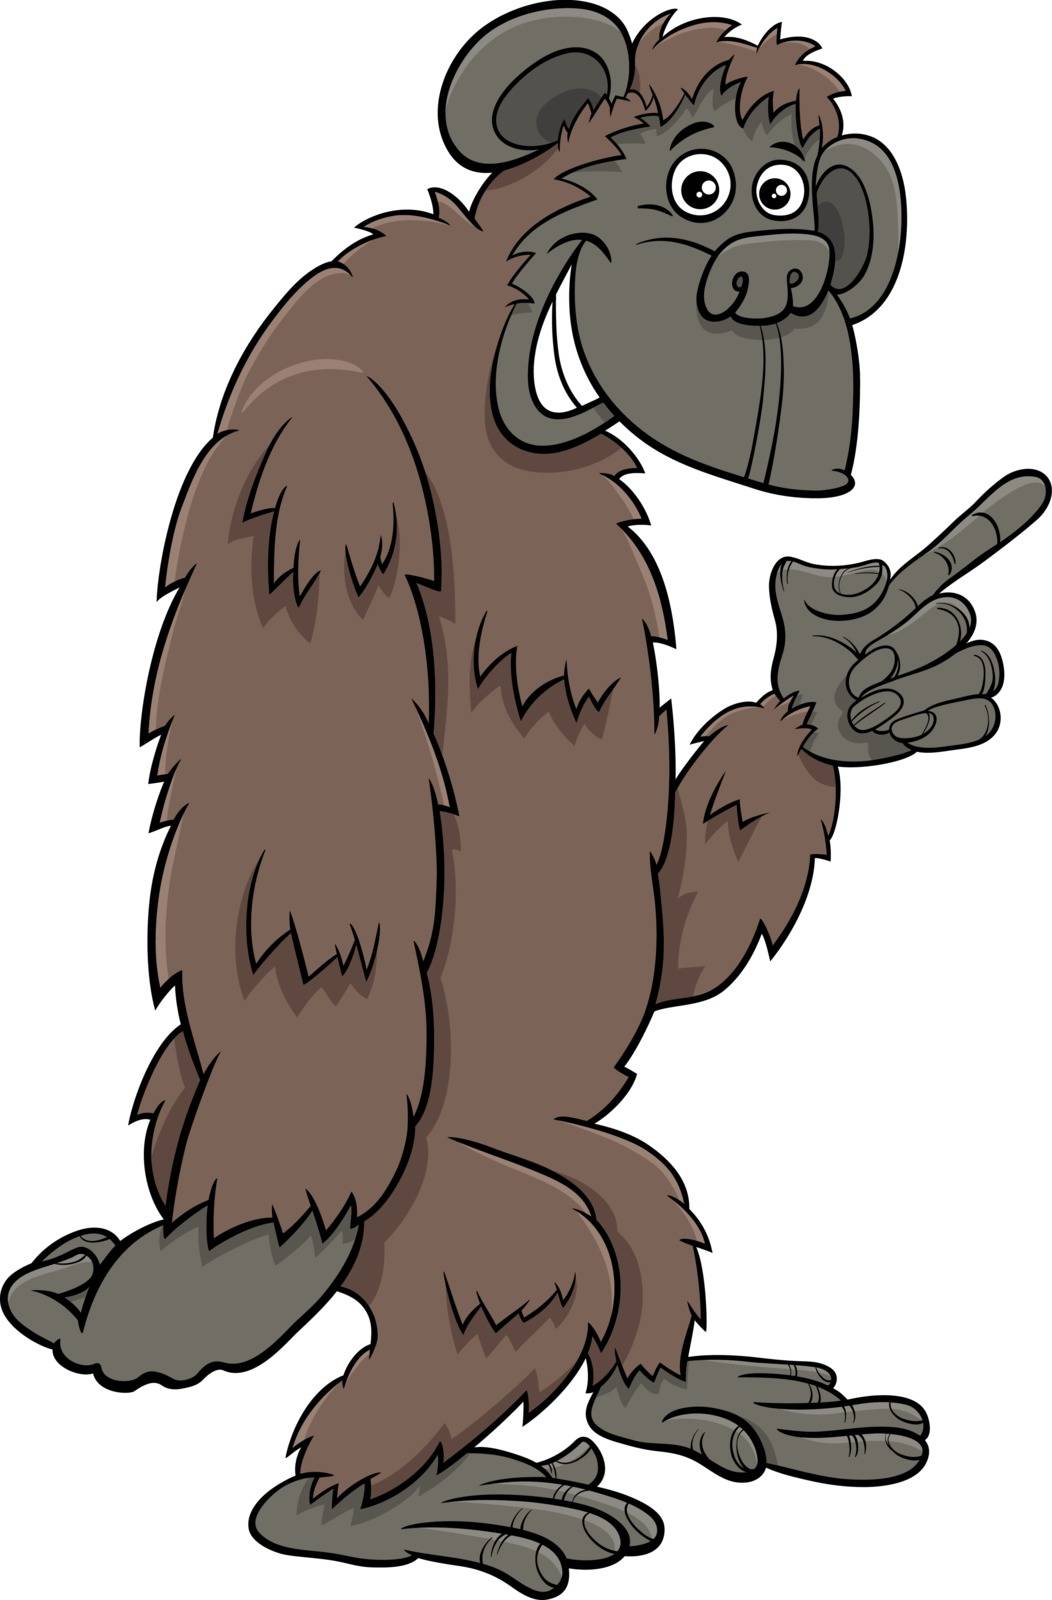 gorilla ape wild cartoon animal character by izakowski